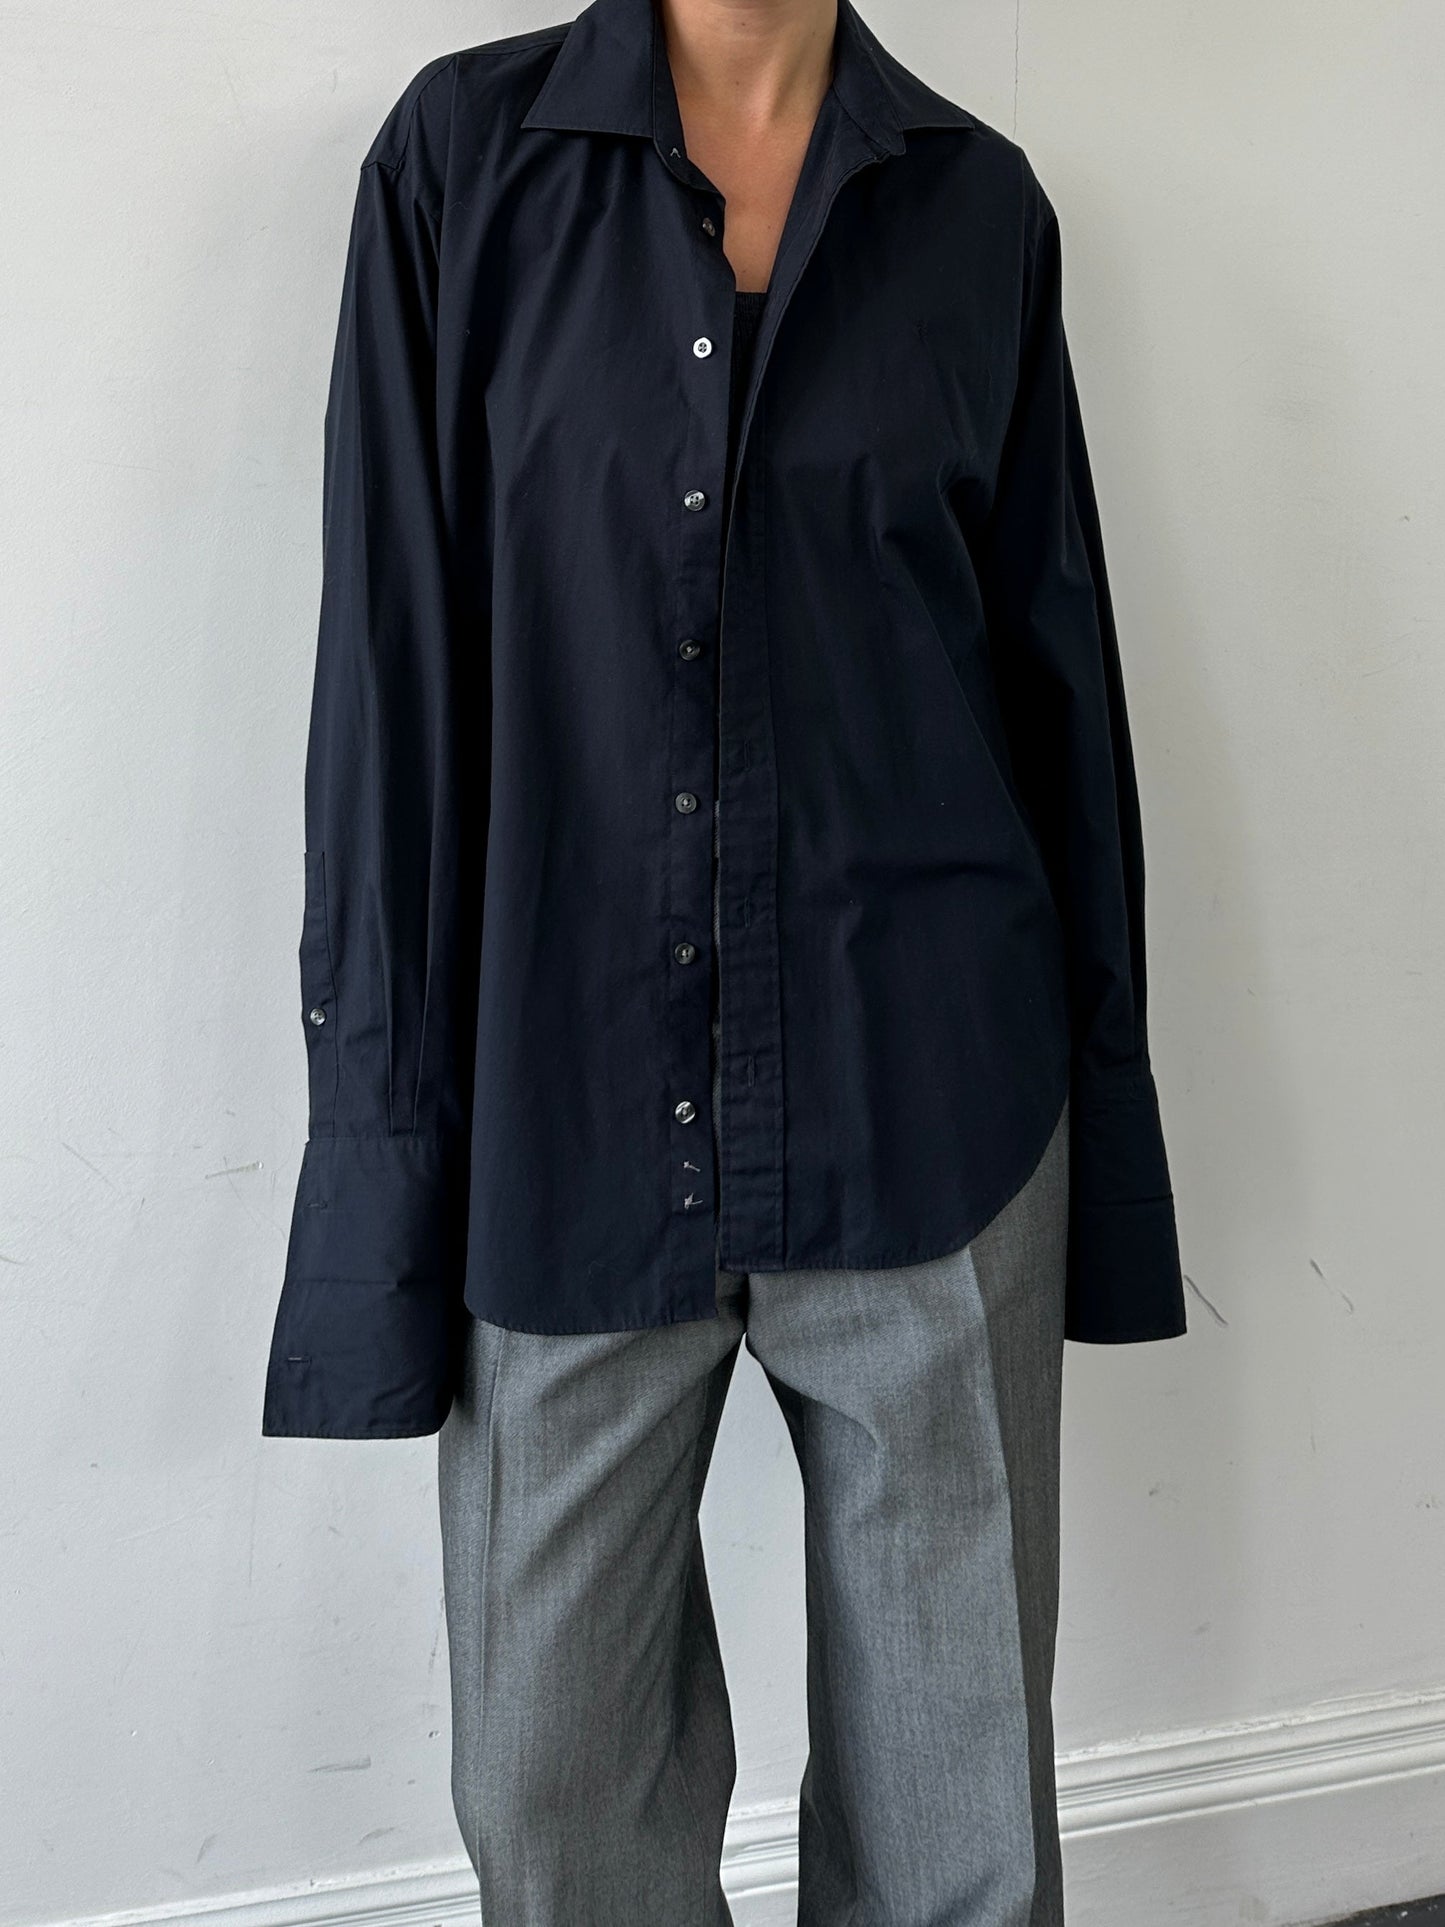 Yves Saint Laurent Cotton Logo Dress Shirt - L/XL